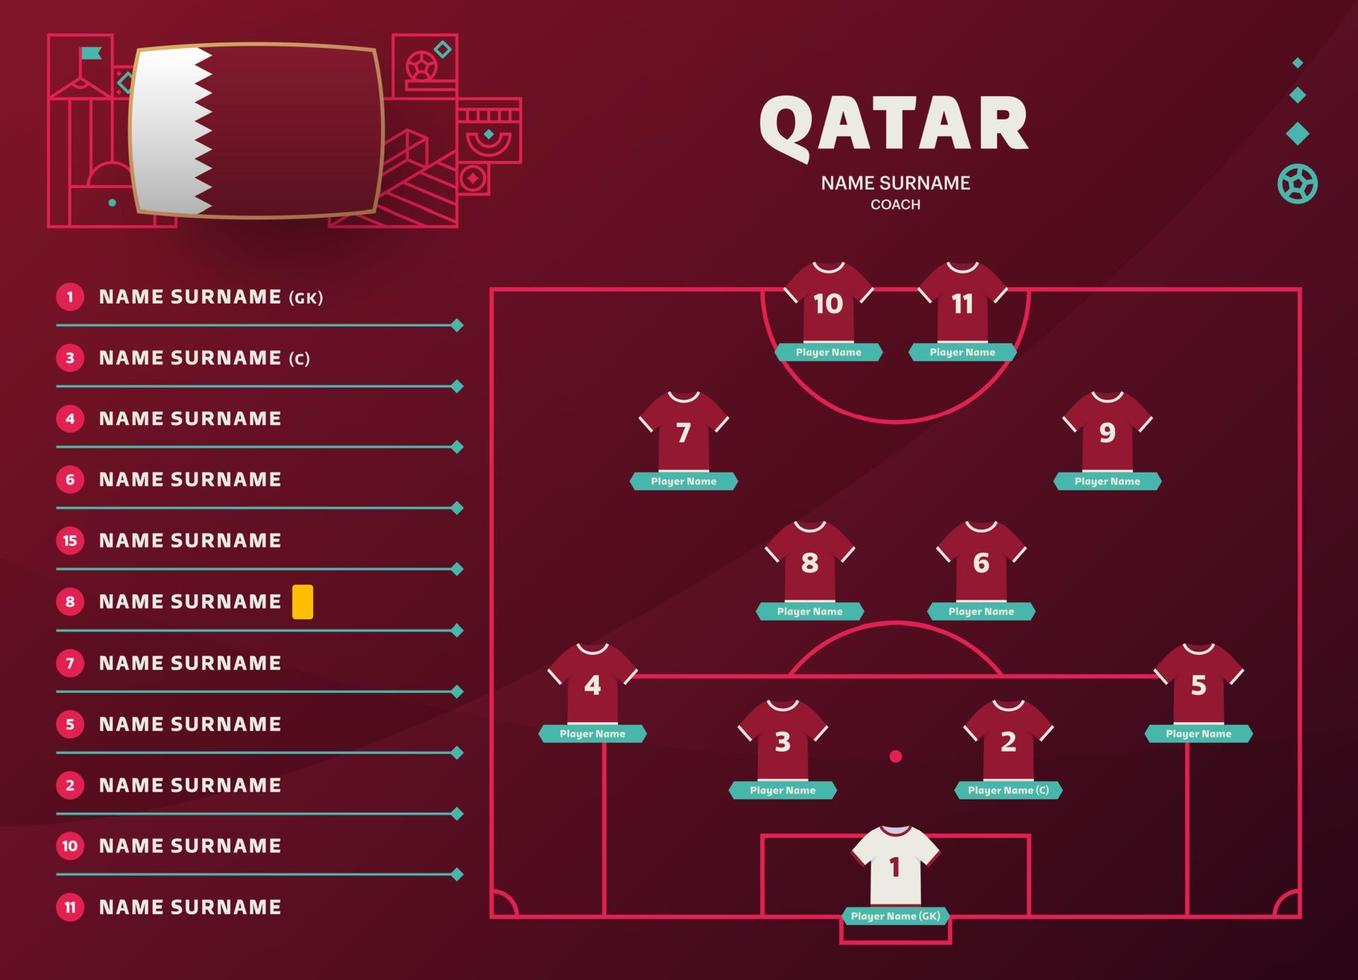 qatar rij wereld Amerikaans voetbal 22 toernooi laatste stadium vector illustratie. land team in de rij gaan staan tafel en team vorming Aan Amerikaans voetbal veld. voetbal toernooi vector land vlaggen